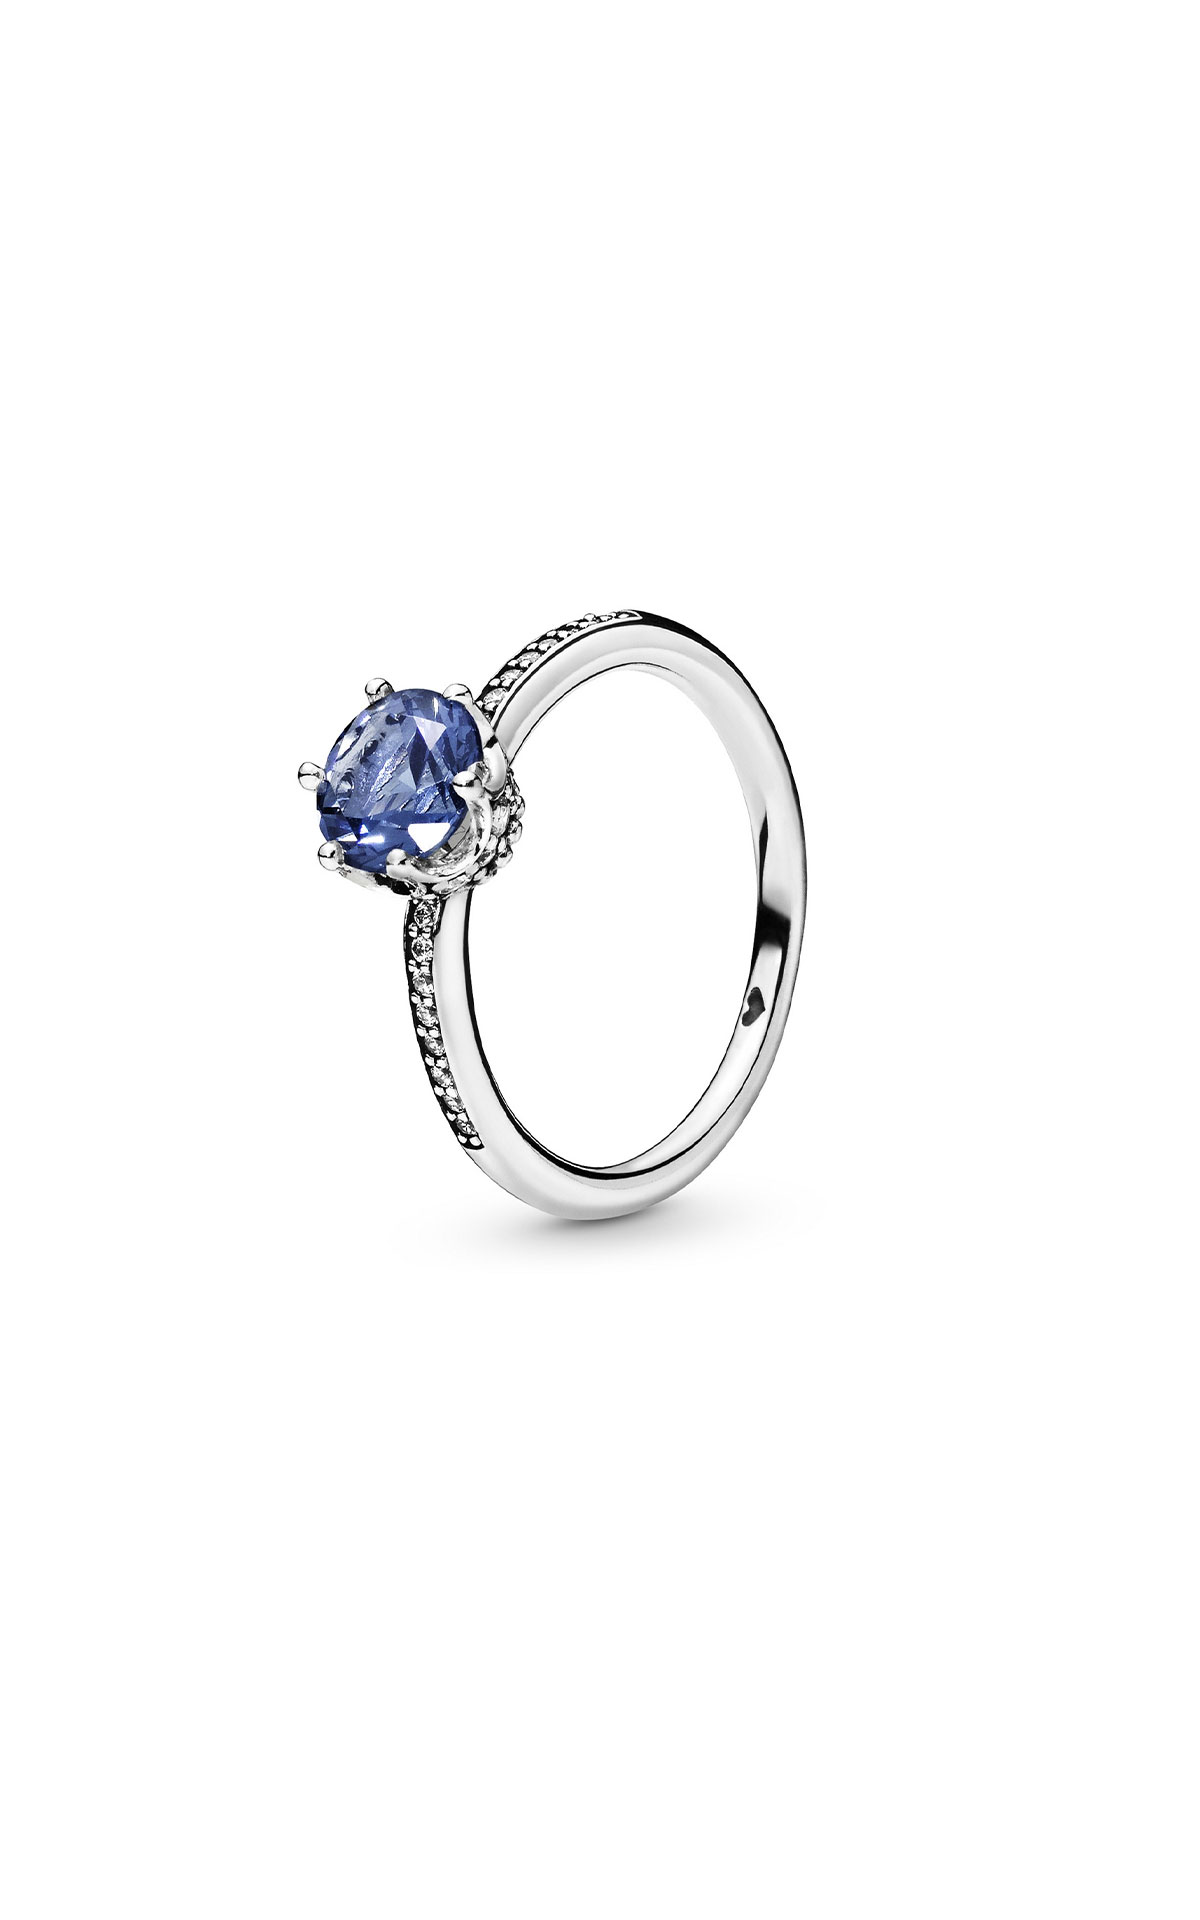 Pandora Blue sparkling crown ring from Bicester Village